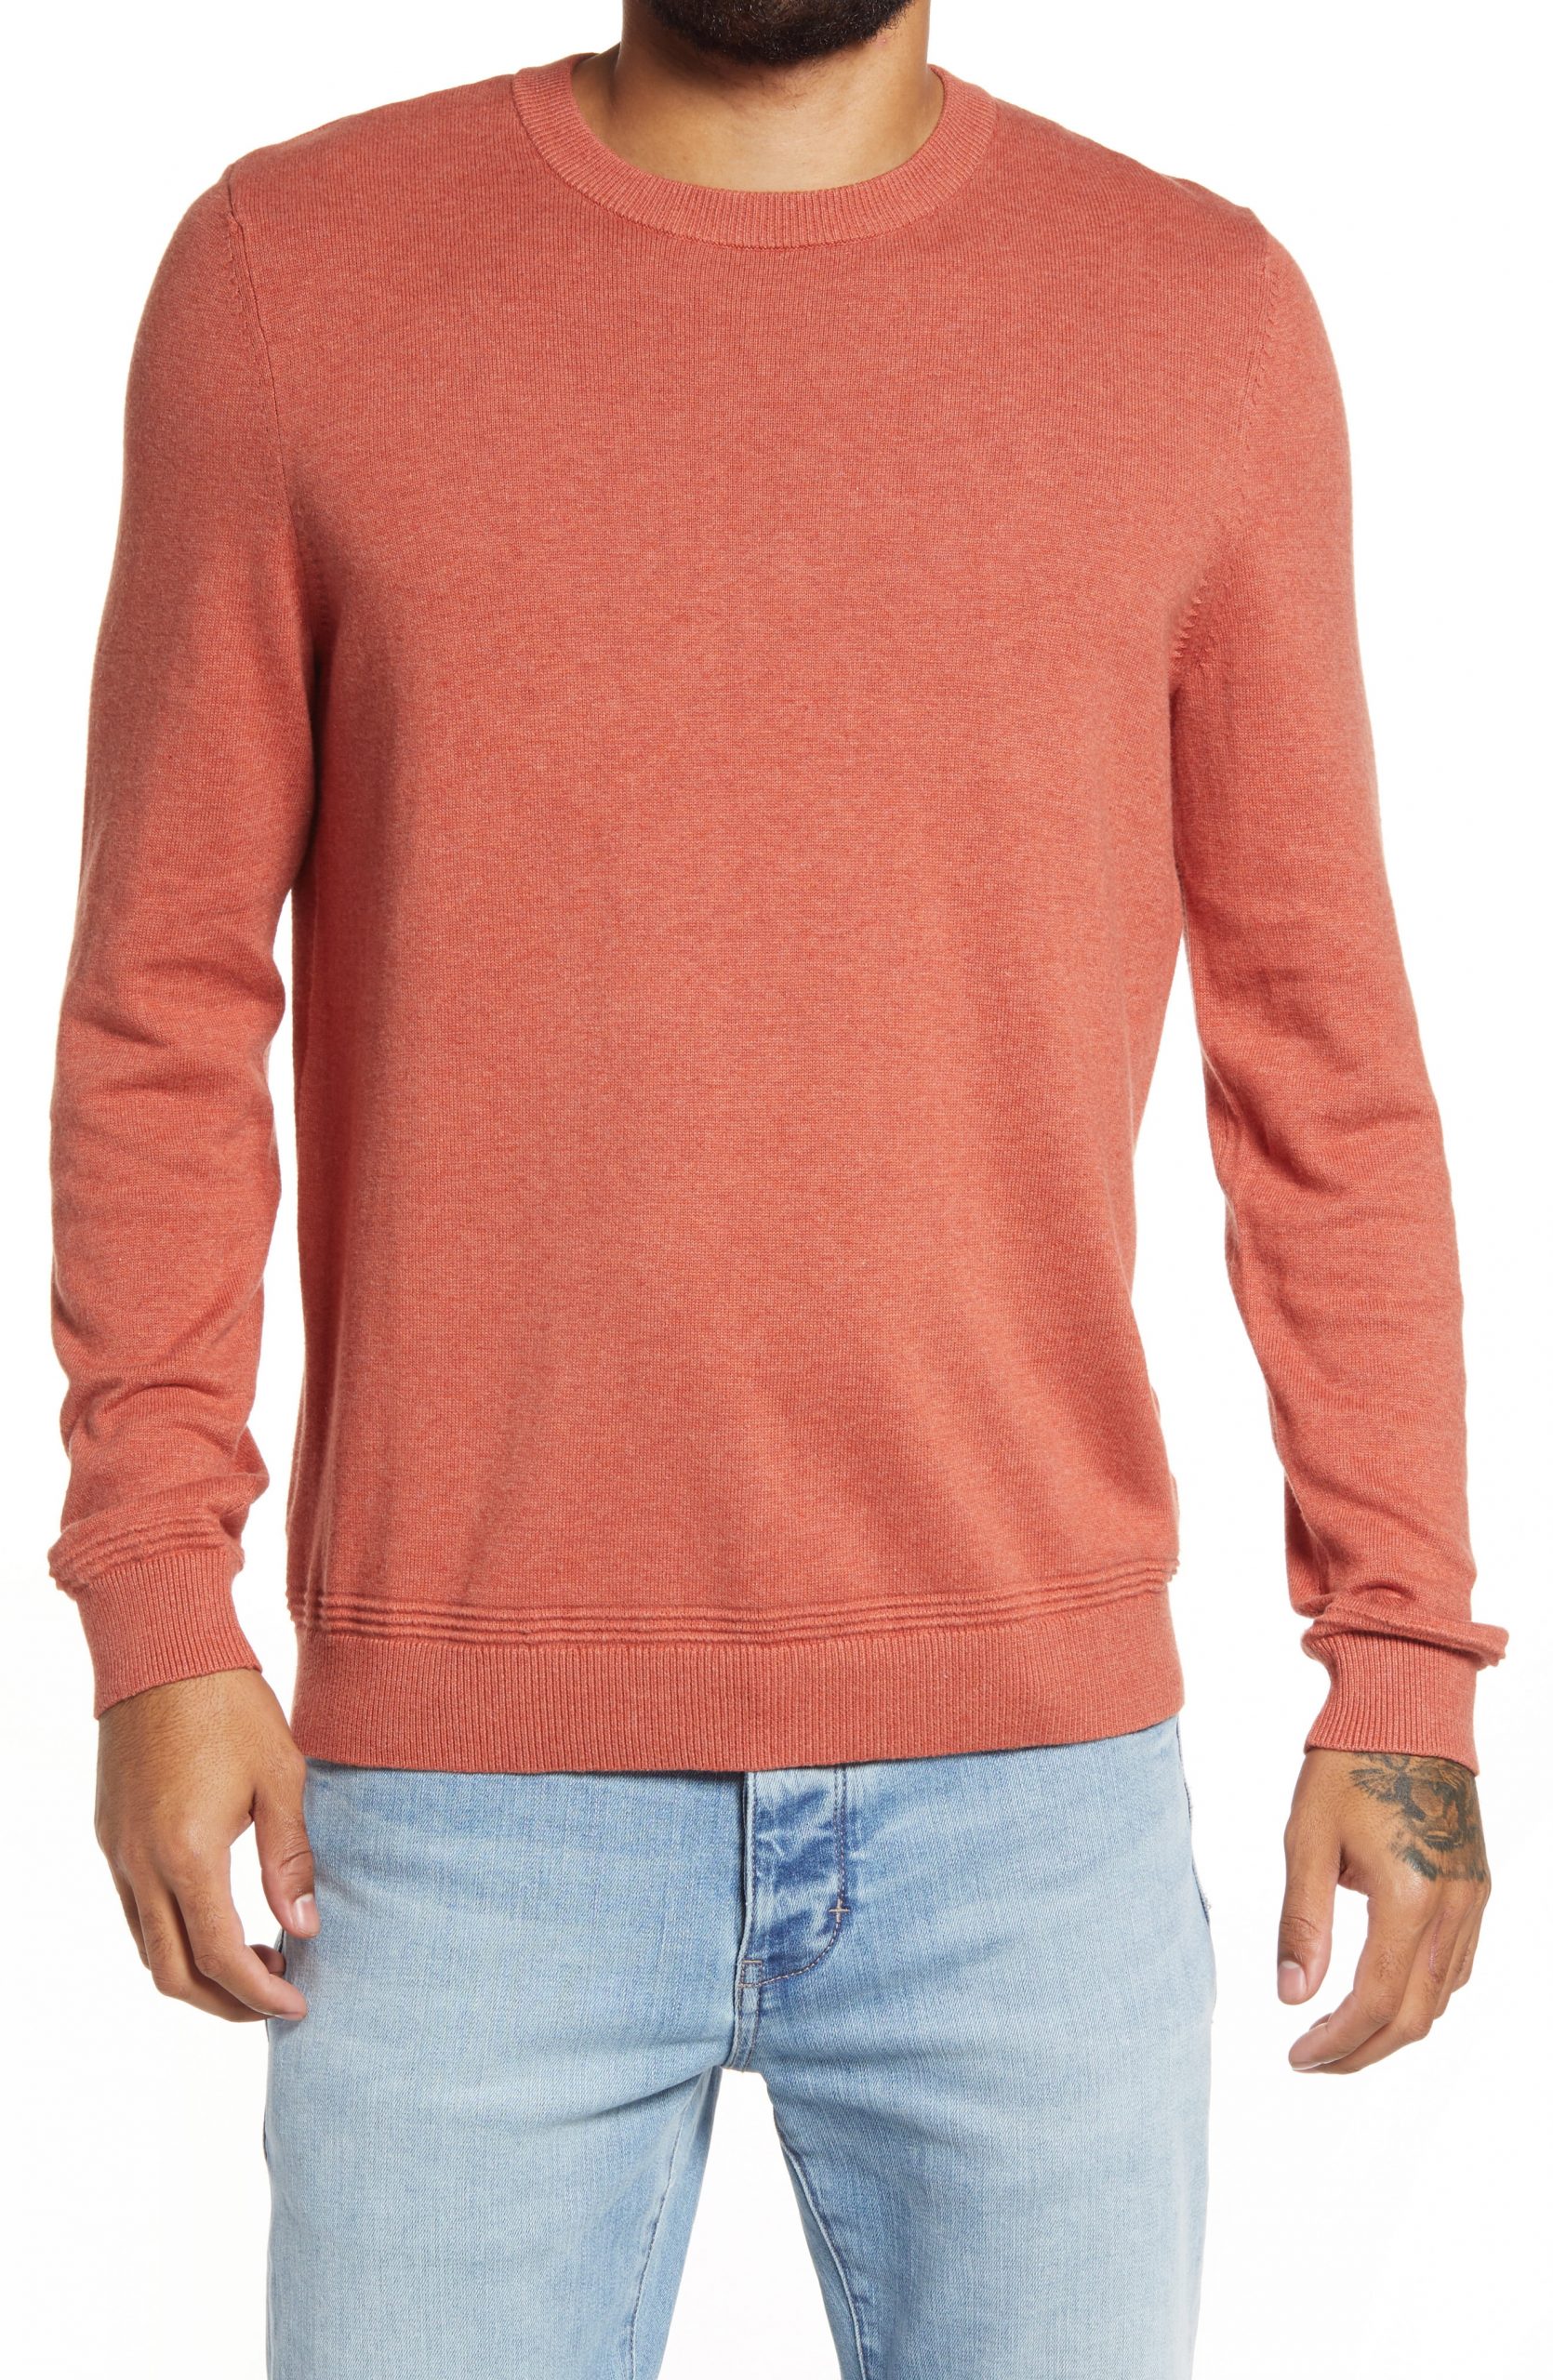 Men’s Topman Marled Cotton Crewneck Sweater, Size Medium - Brown | The ...